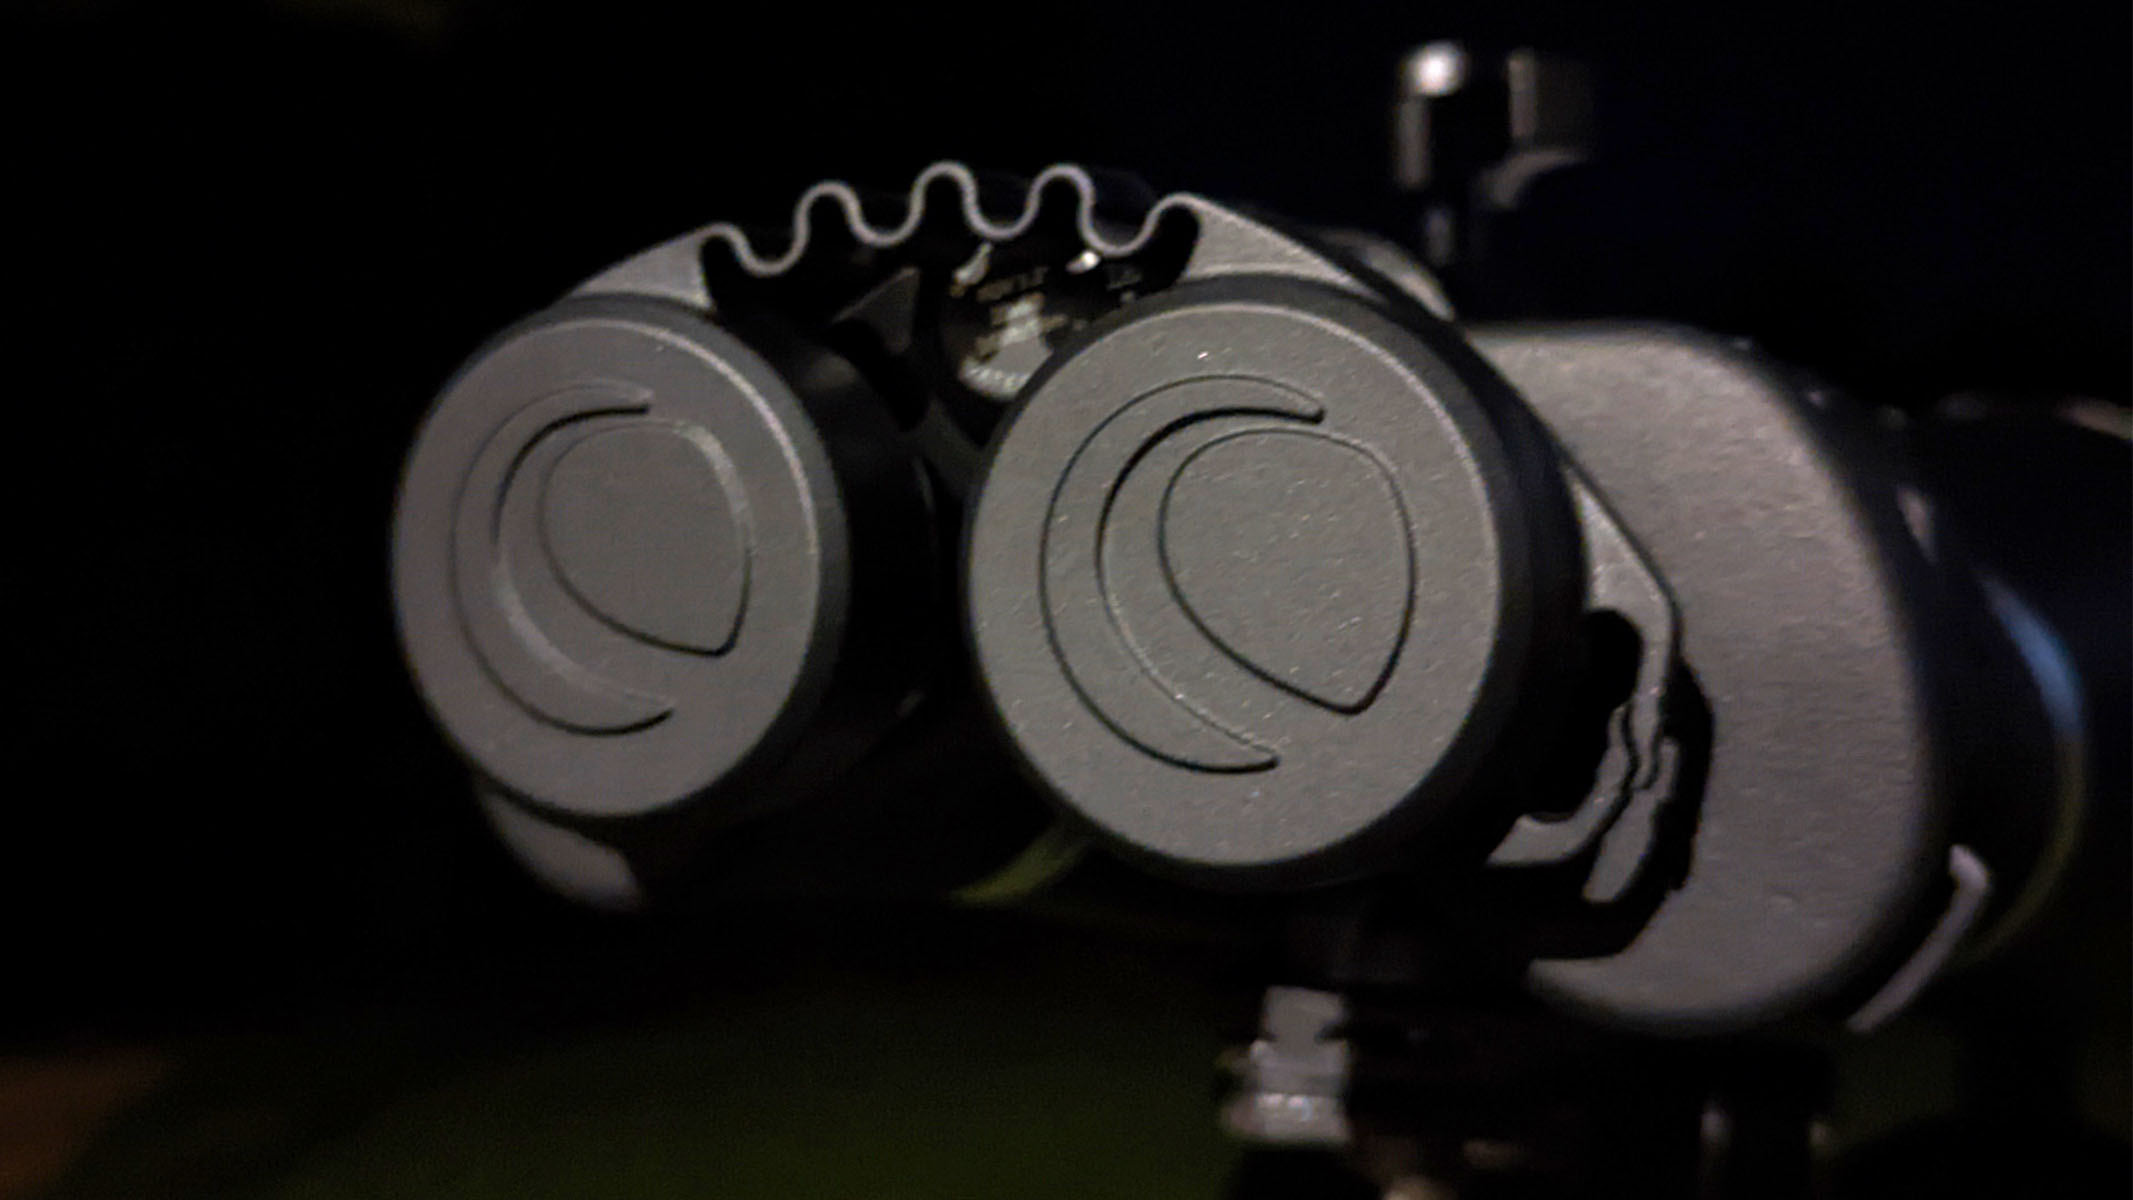 Eyepiece lens caps on the binoculars at night